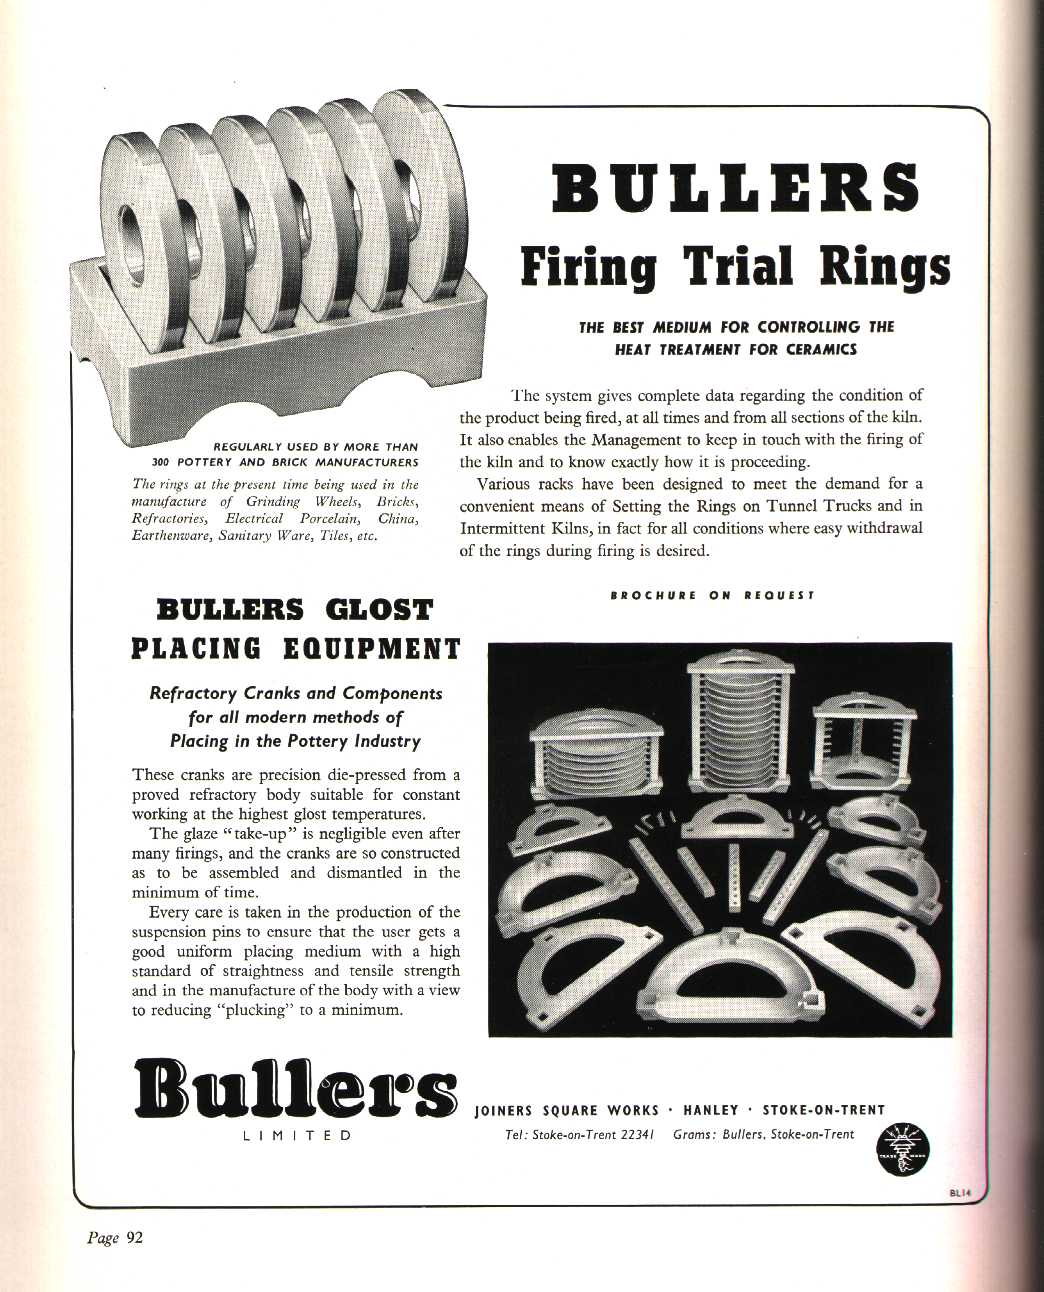 Bullers Ltd. (Hanley) (Firing trial rings and kiln ware)